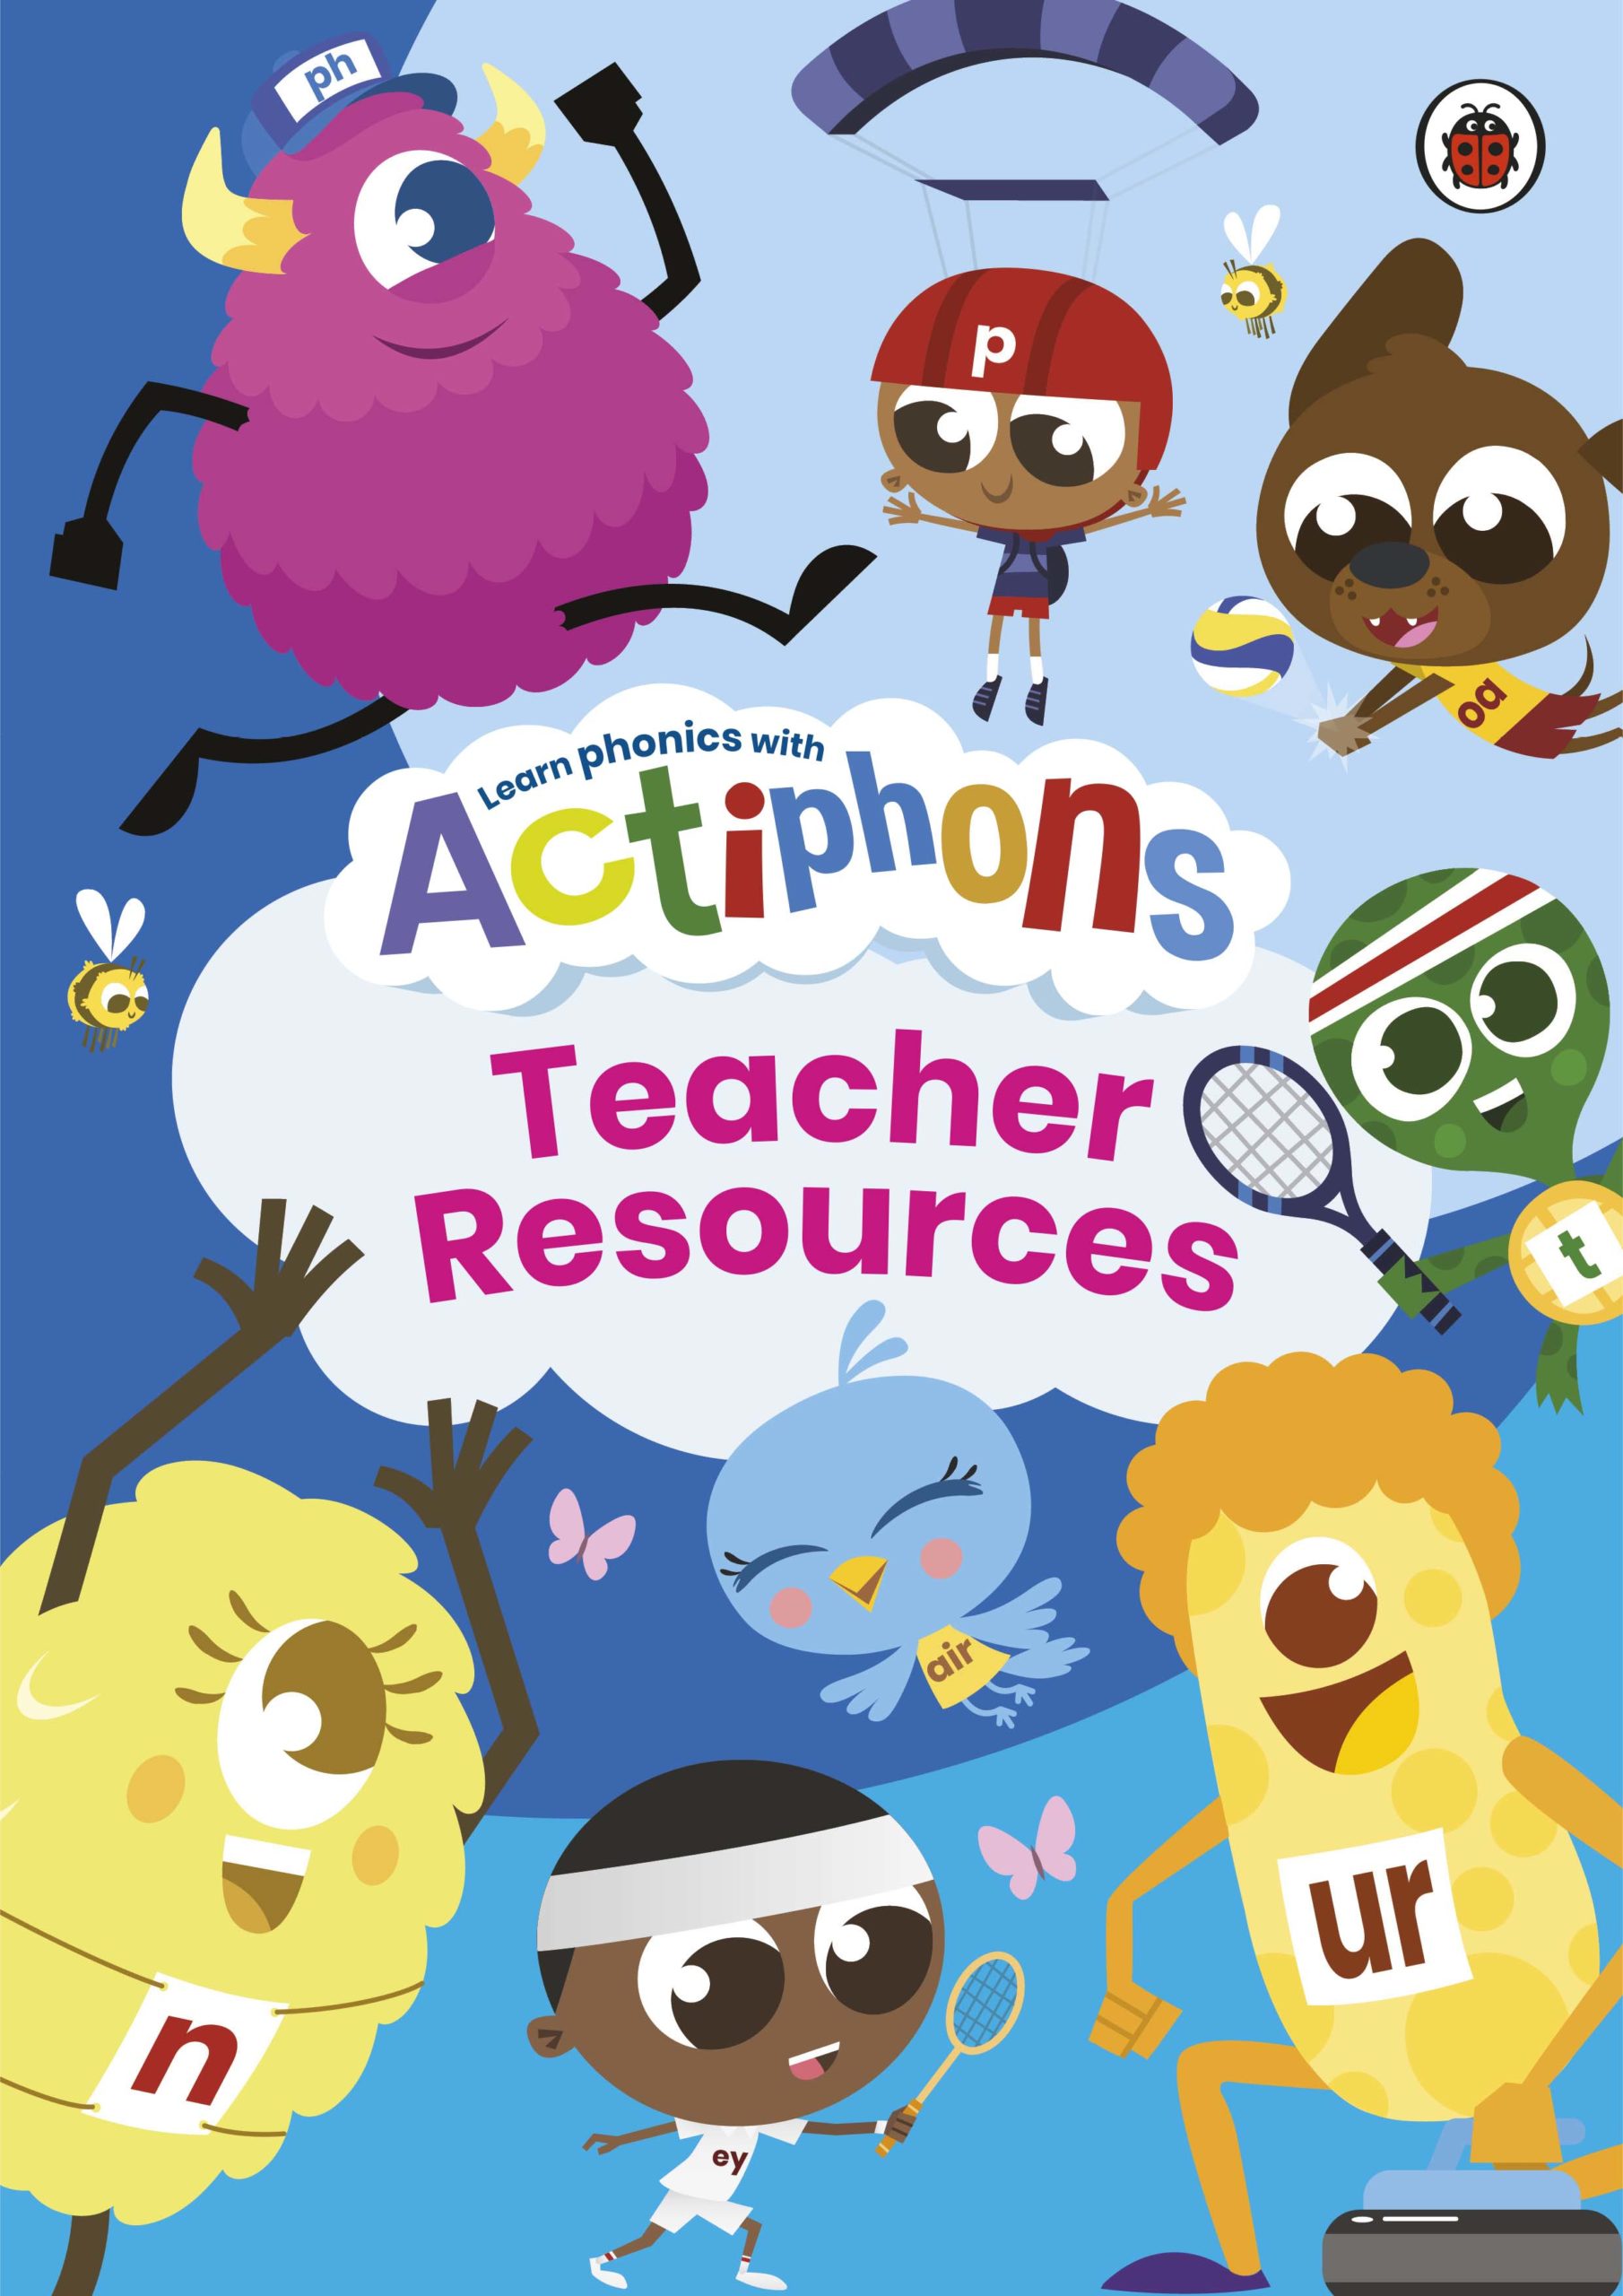 Actiphons Teacher Resources